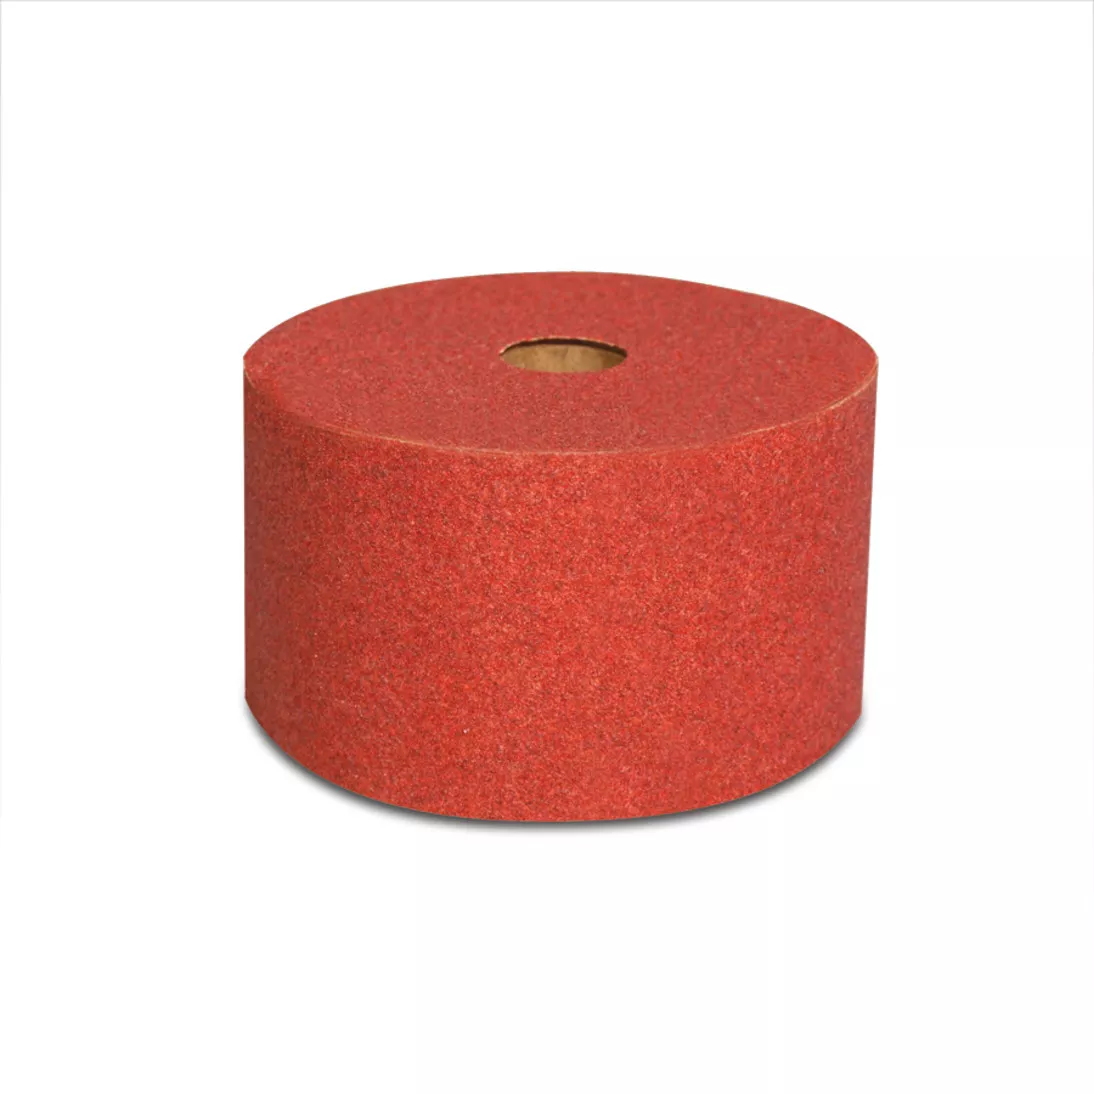 3M™ Red Abrasive Stikit™ Sheet Roll, 01686, P150, 2-3/4 in x 25 yd, 6
rolls per case